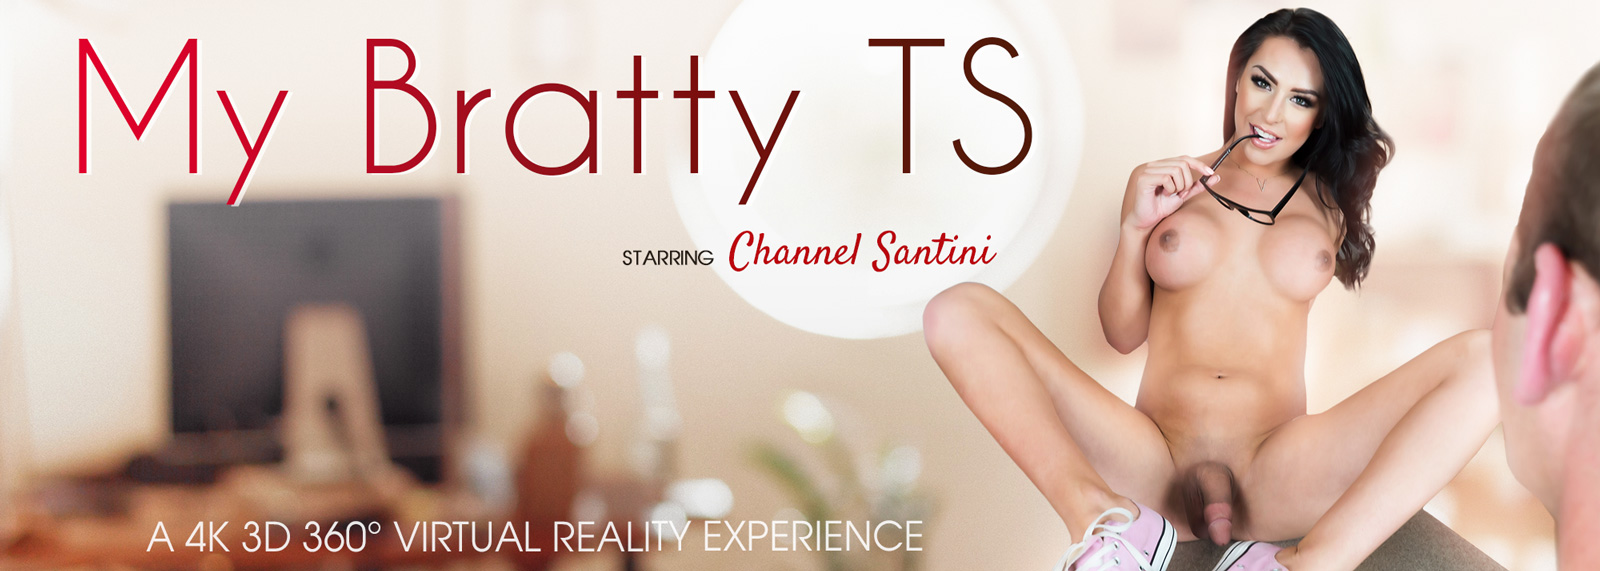 My Bratty TS - VR Porn Video, Starring Chanel Santini VR